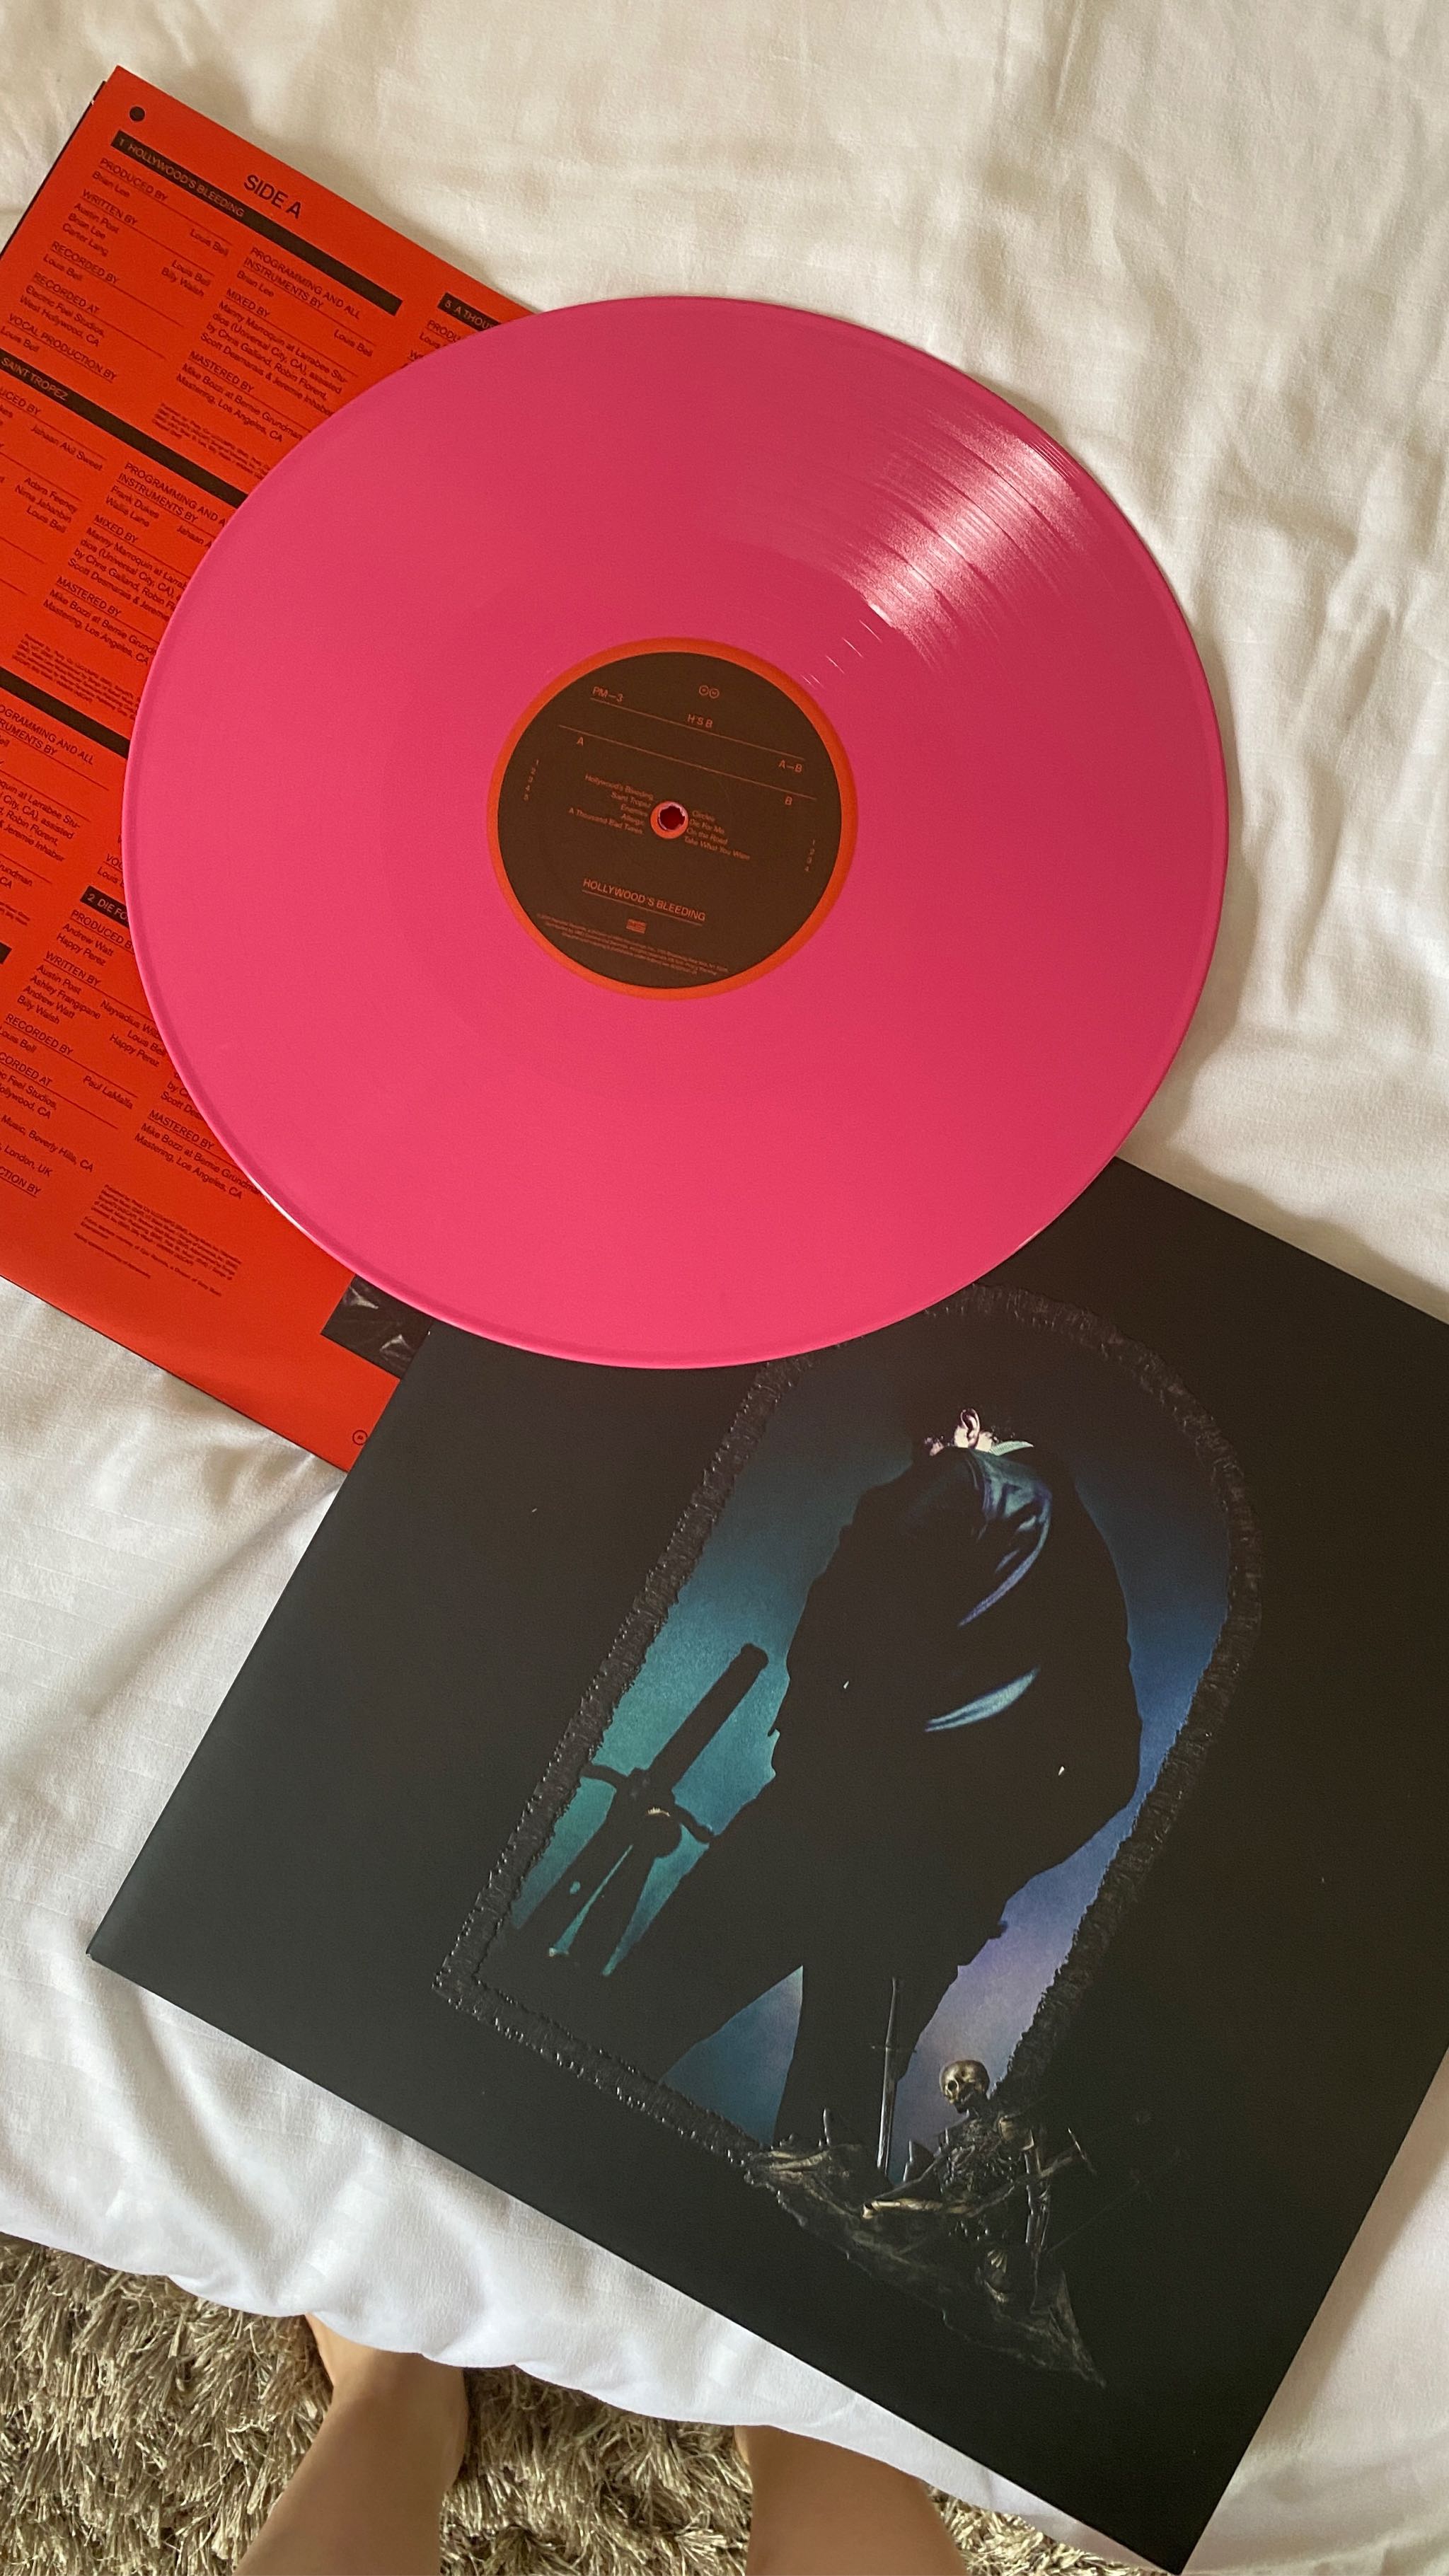 Post Malone - Hollywood's Bleeding (Pink Vinyl)